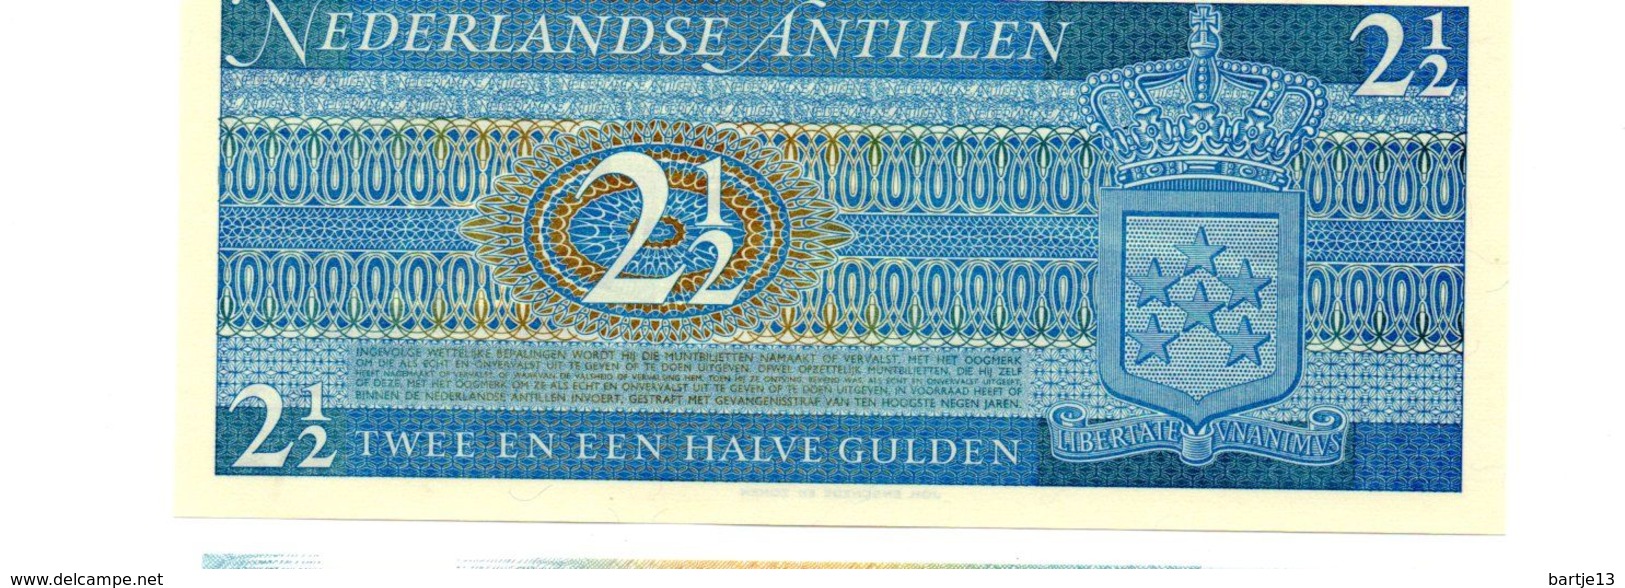 NEDERLANDSE ANTILLEN 2 1/2 GULDEN PICK 21a UNCIRCULATED - Antilles Néerlandaises (...-1986)